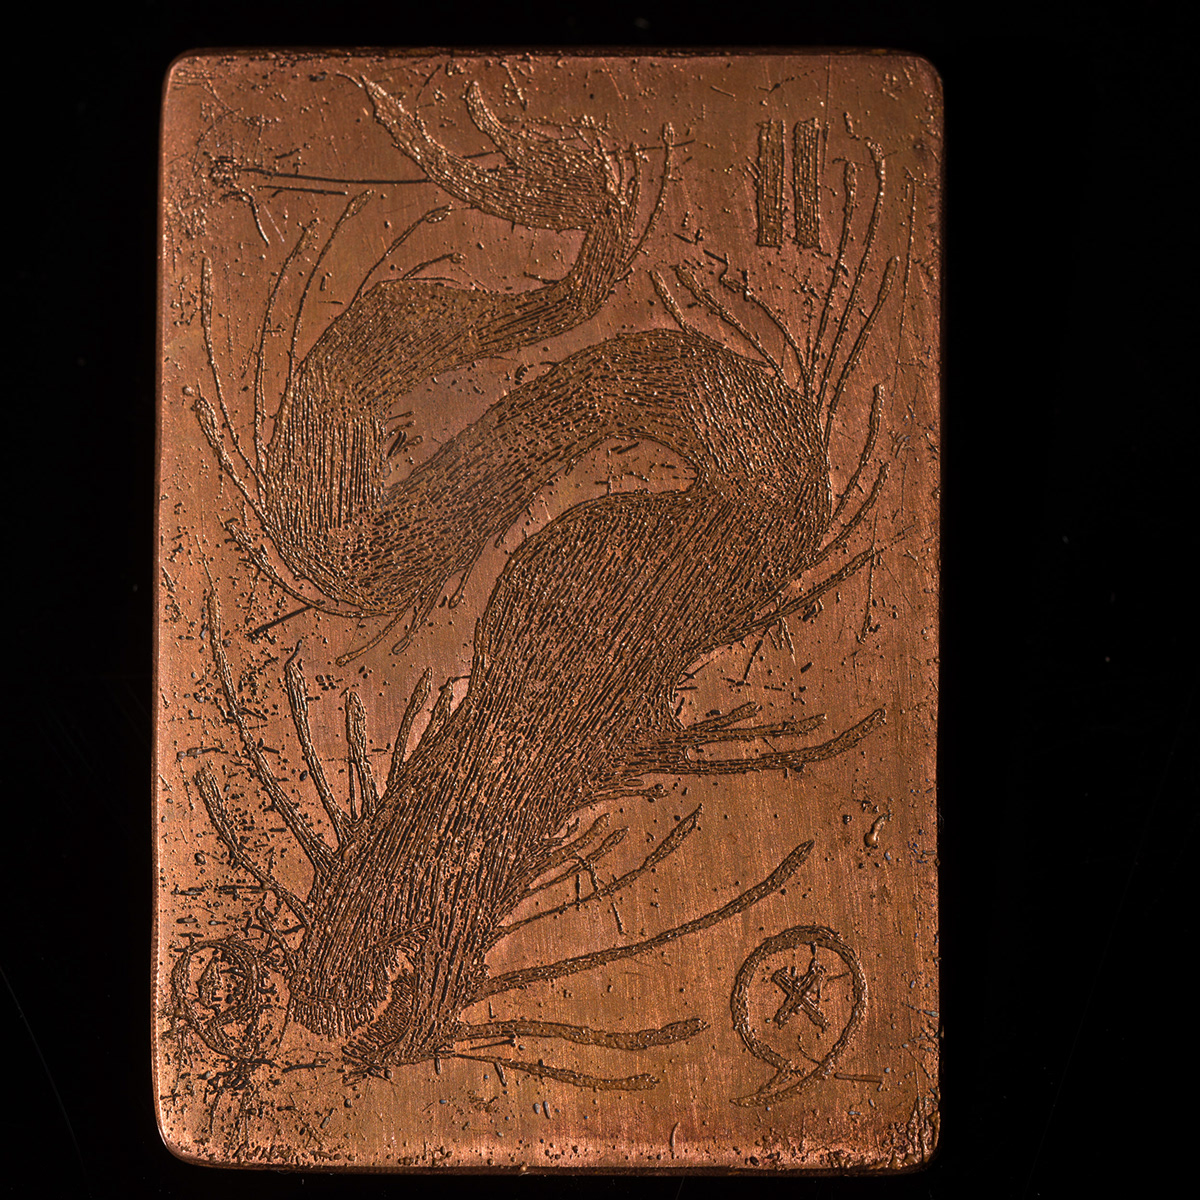 etching metalsmithing copper story narrative diamond tiger black horse